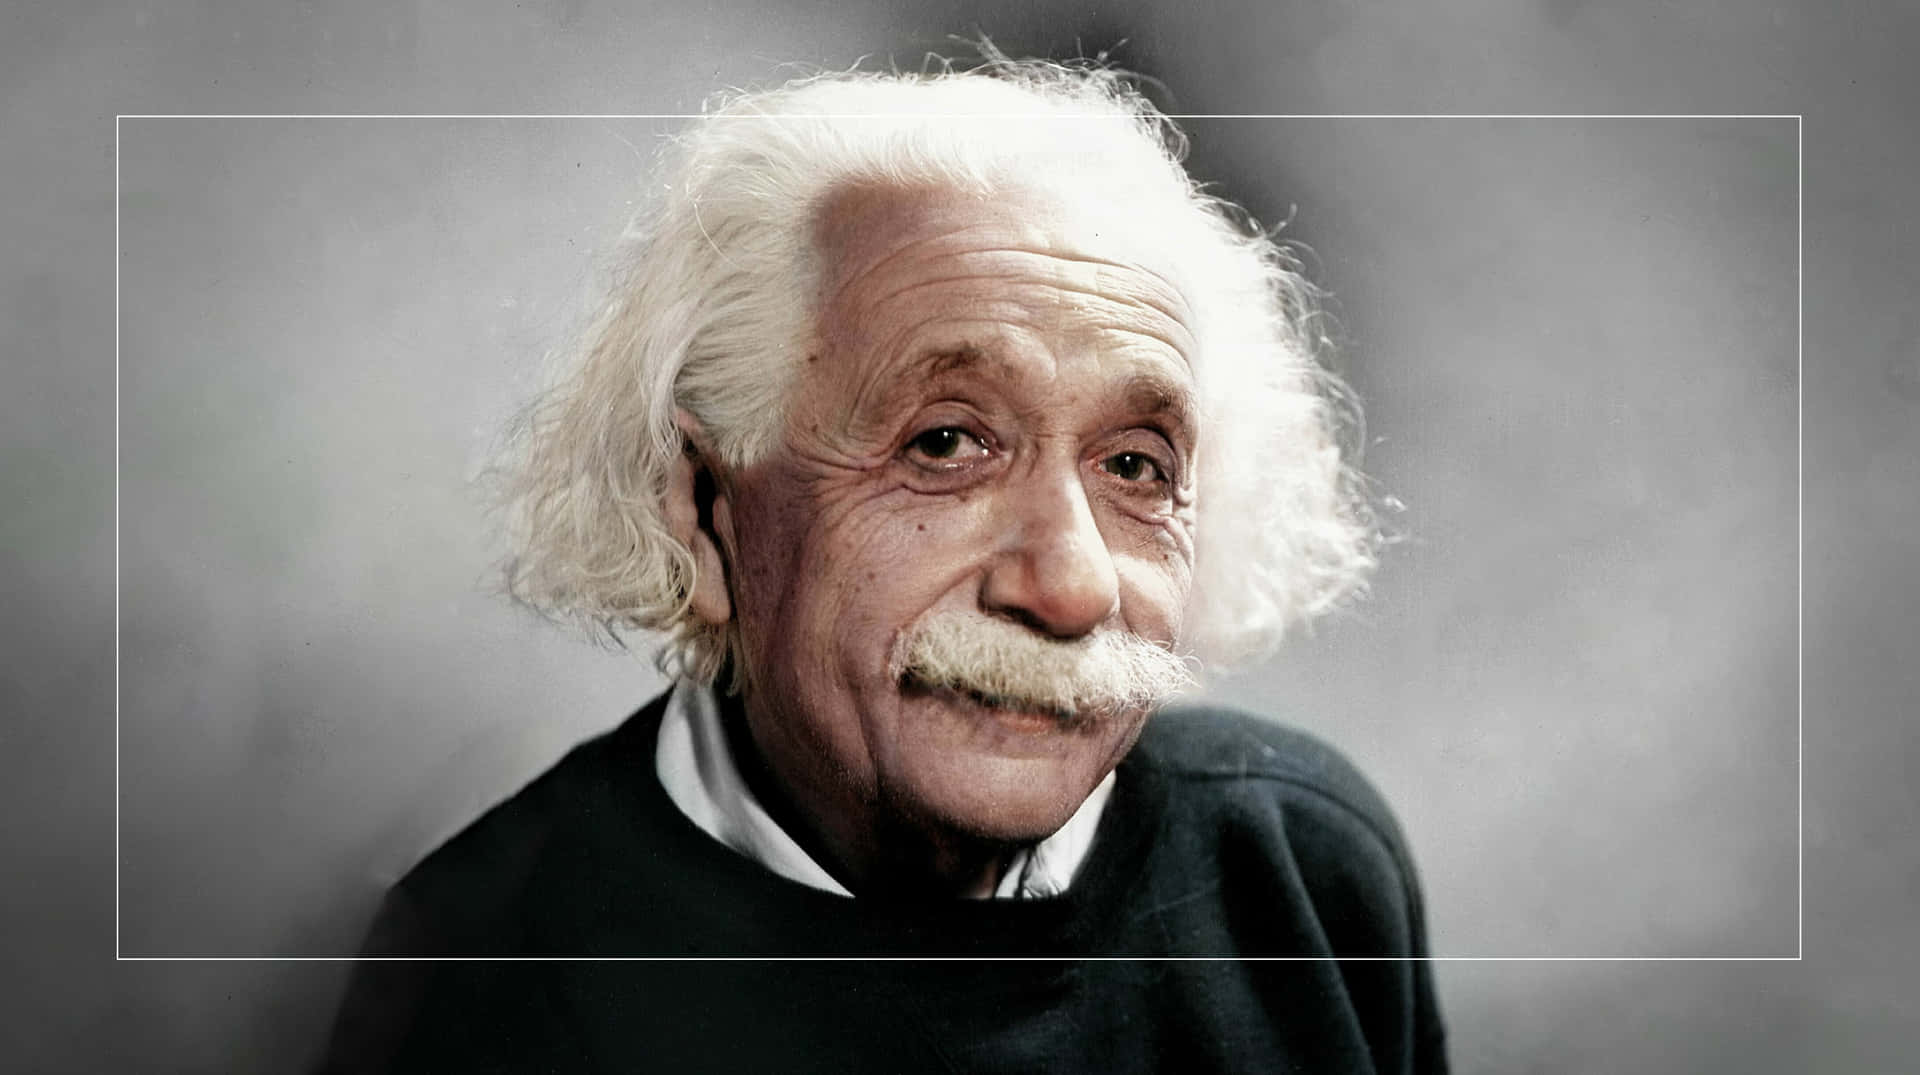 Albert Einstein, the renowned physicist and revolutionary thinker